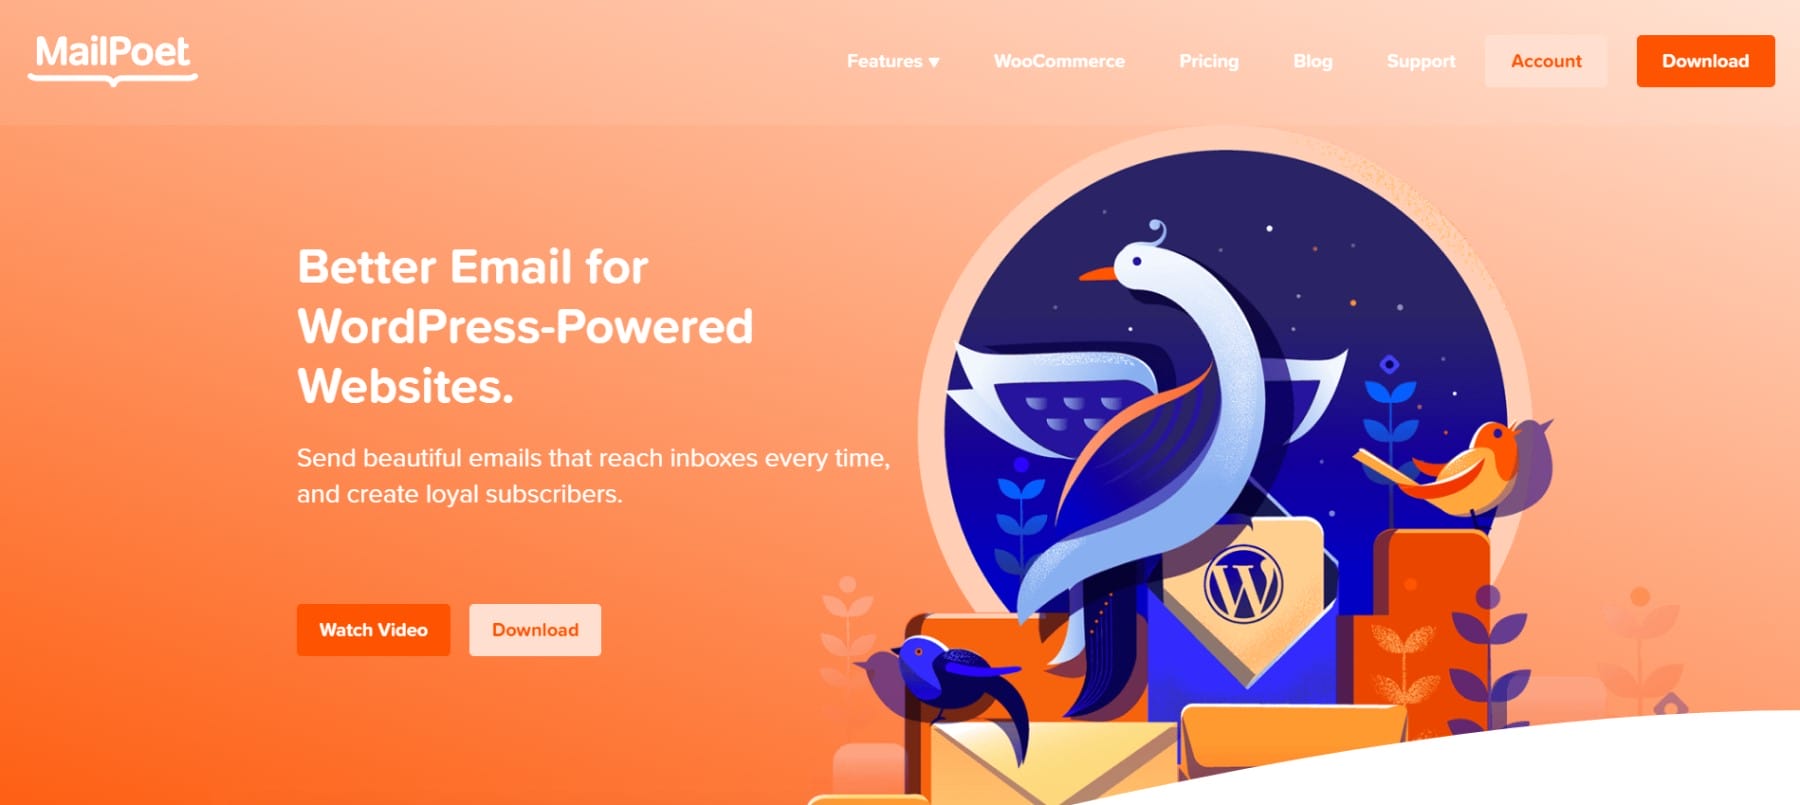 MailPoet WordPress Email Marketing